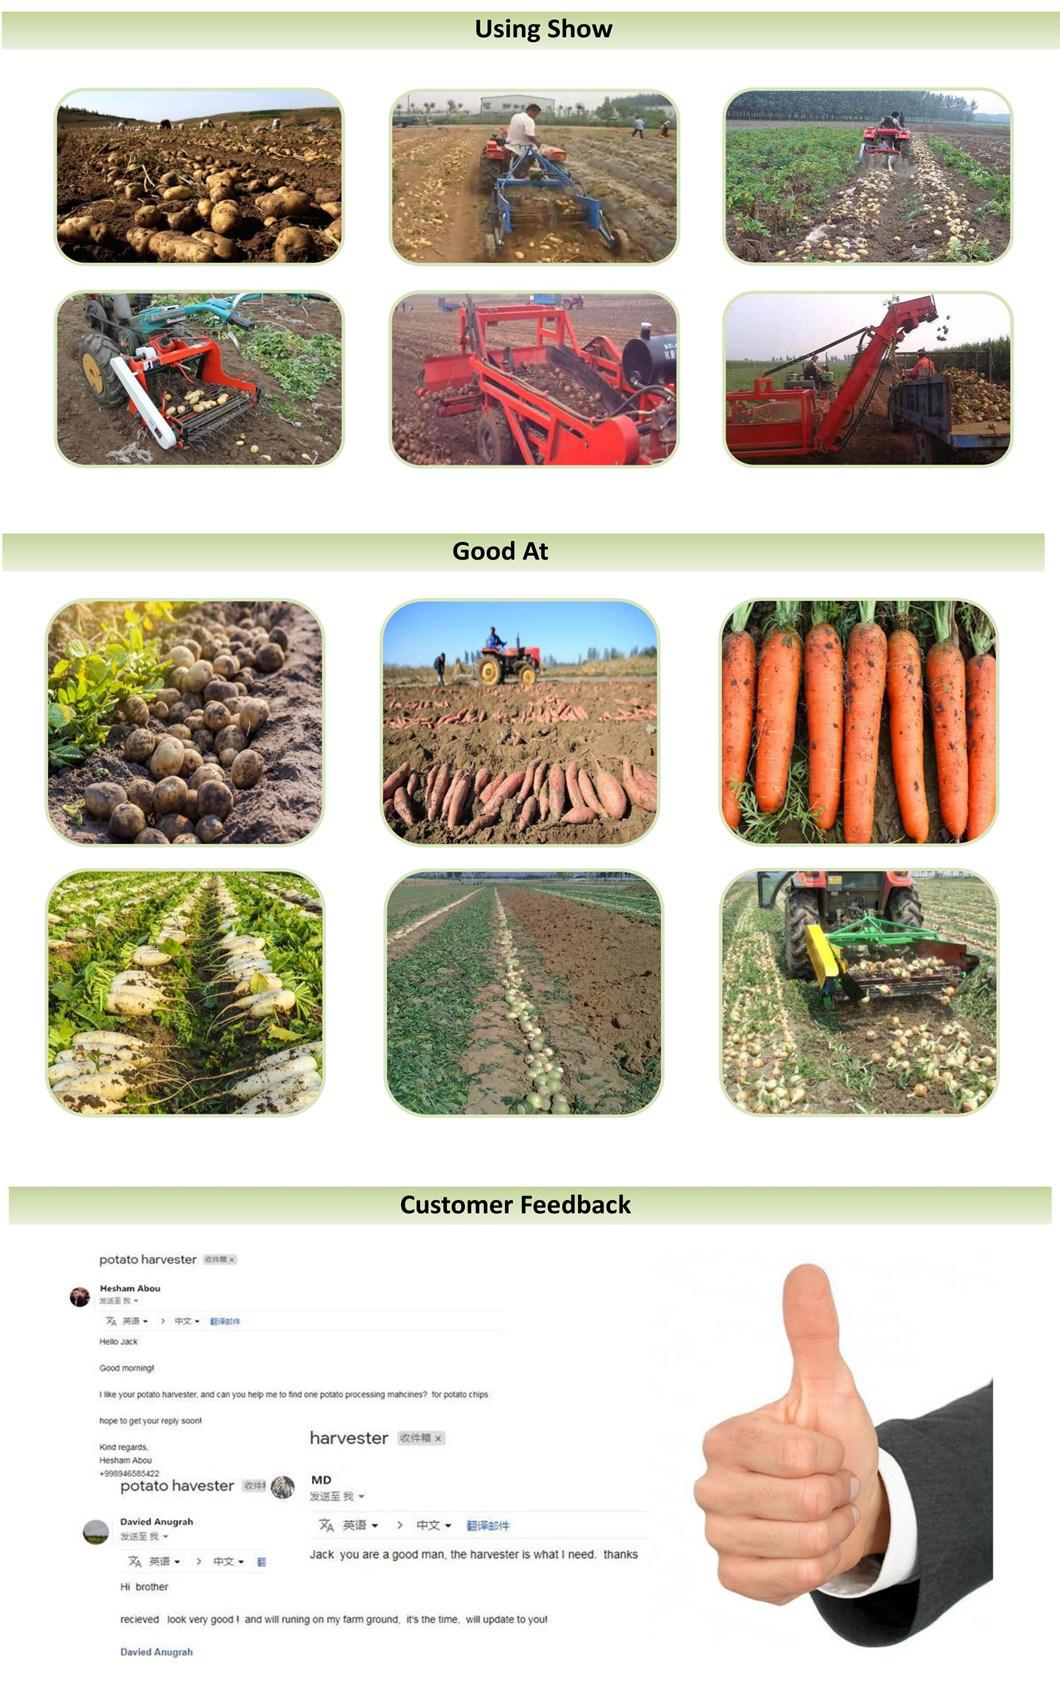 China Sell New Type Potato Harvest Machine/Sweet Potato Harvesting Equipment /Onion Digger/Spanish Potato Harvester for Farm with Low Price